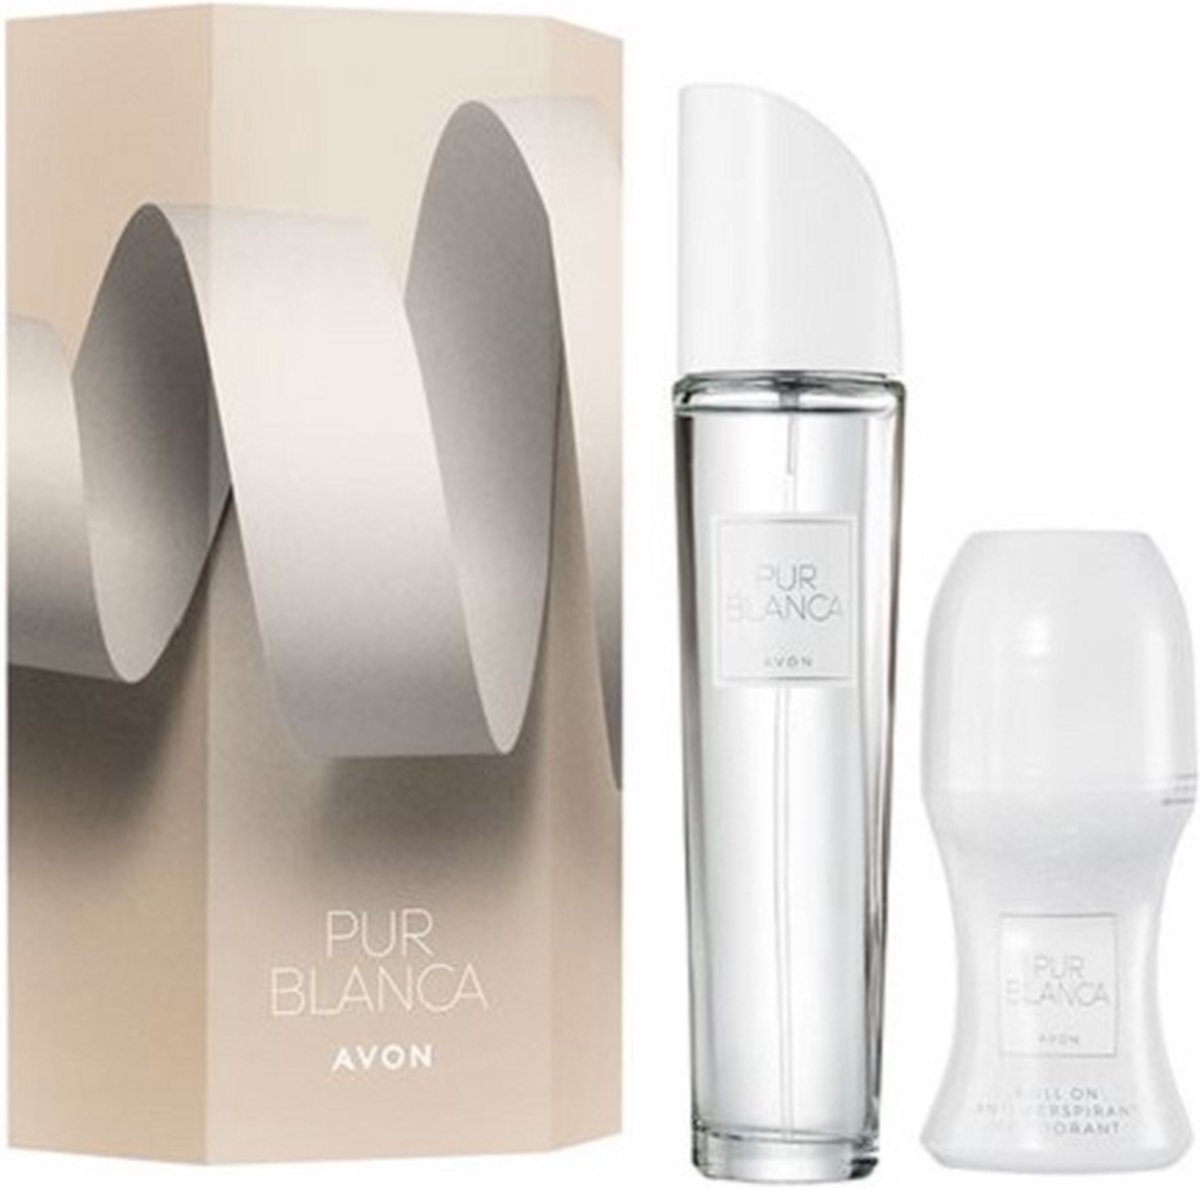 Avon - Pur Blanca Gift Set